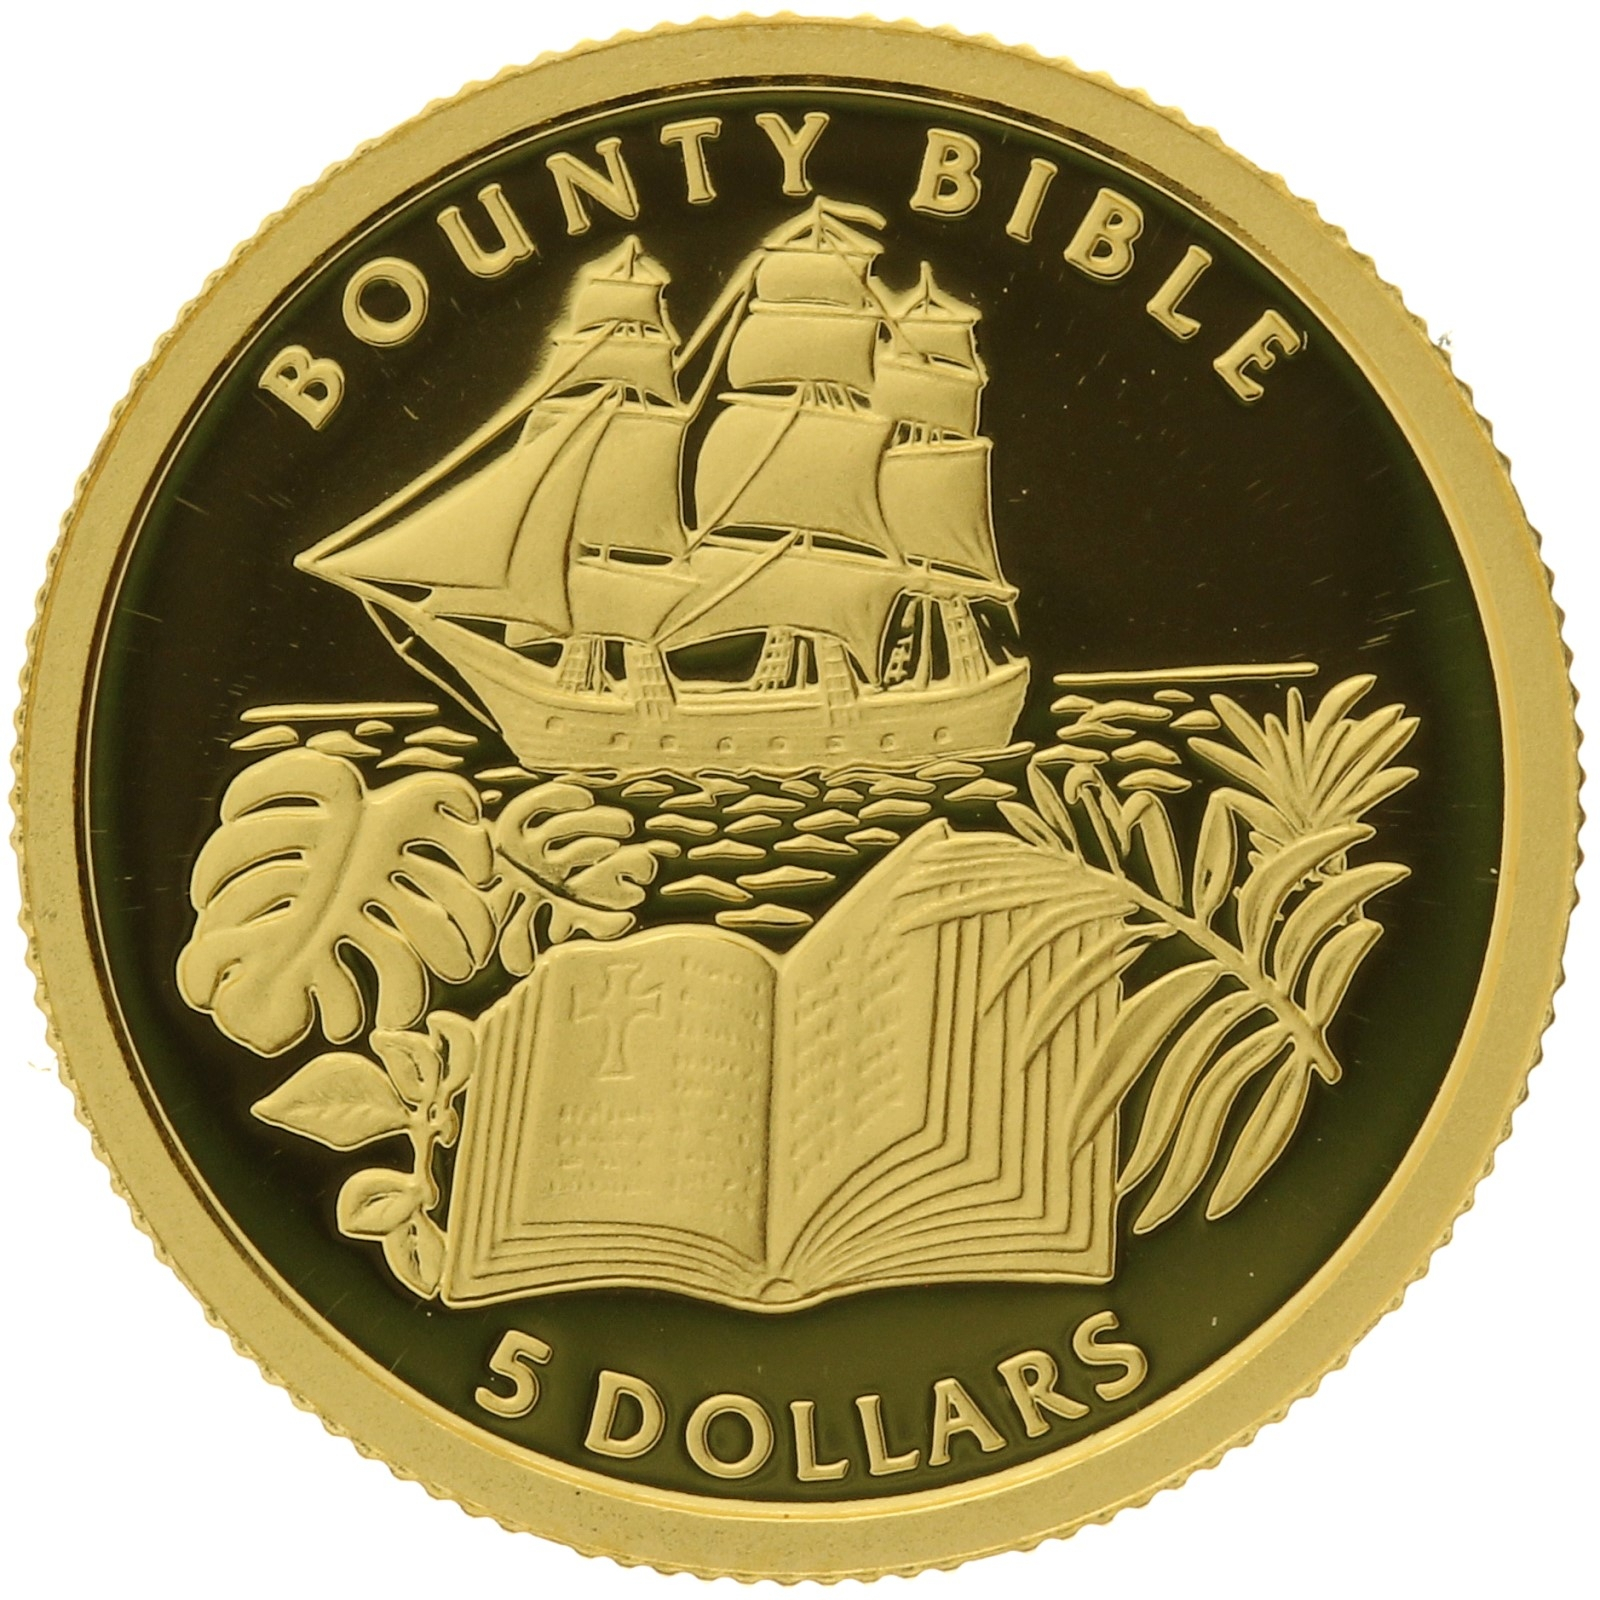 Pitcairn Islands - 5 dollars - 2005 - Bounty Bible - 1/25oz